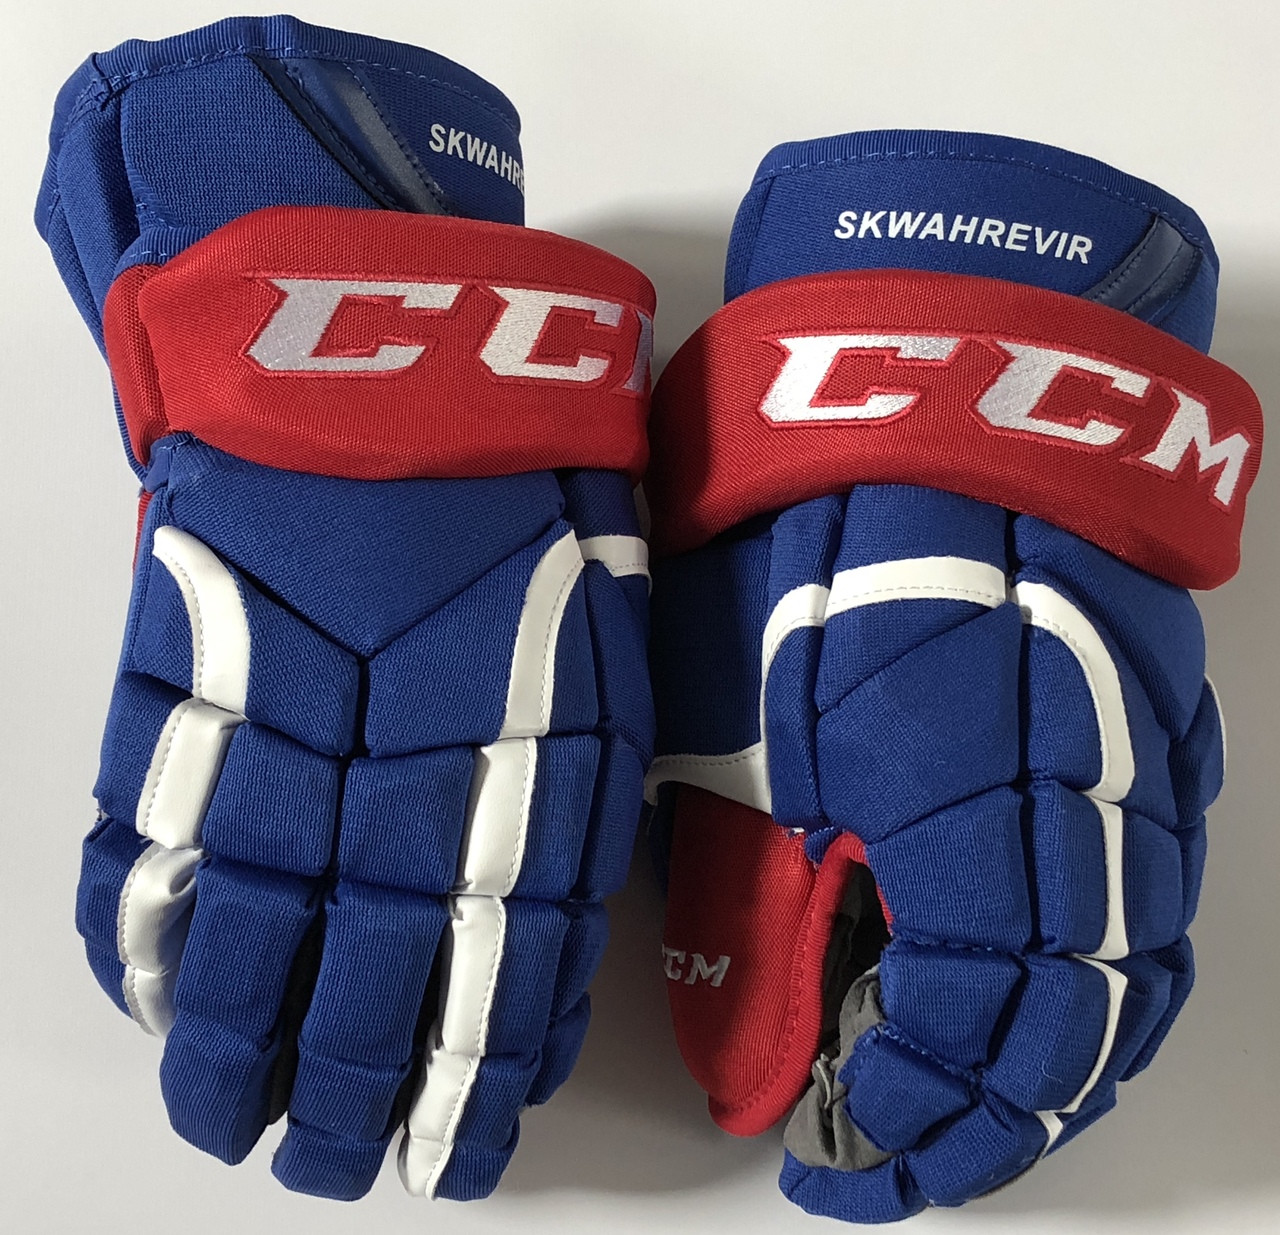 Ccm hg12 перчатки. Краги ccm Pro stock hg12 Gloves. Ccm 30k краги. Краги ccm Pro 14. Перчатки 12 лет